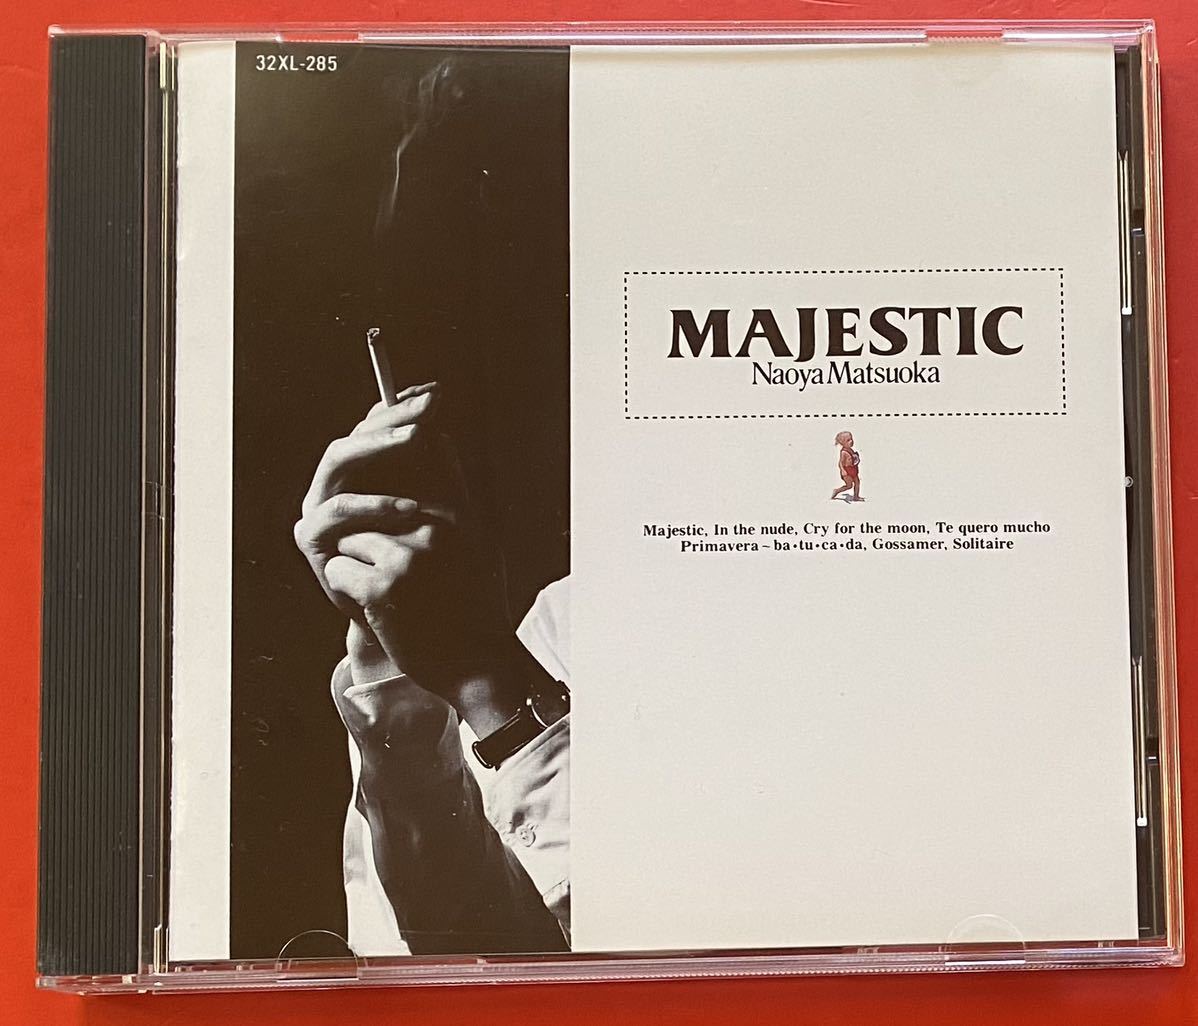 【CD】松岡直也「Majestic」NAOYA MATSUOKA [11170363]_画像1